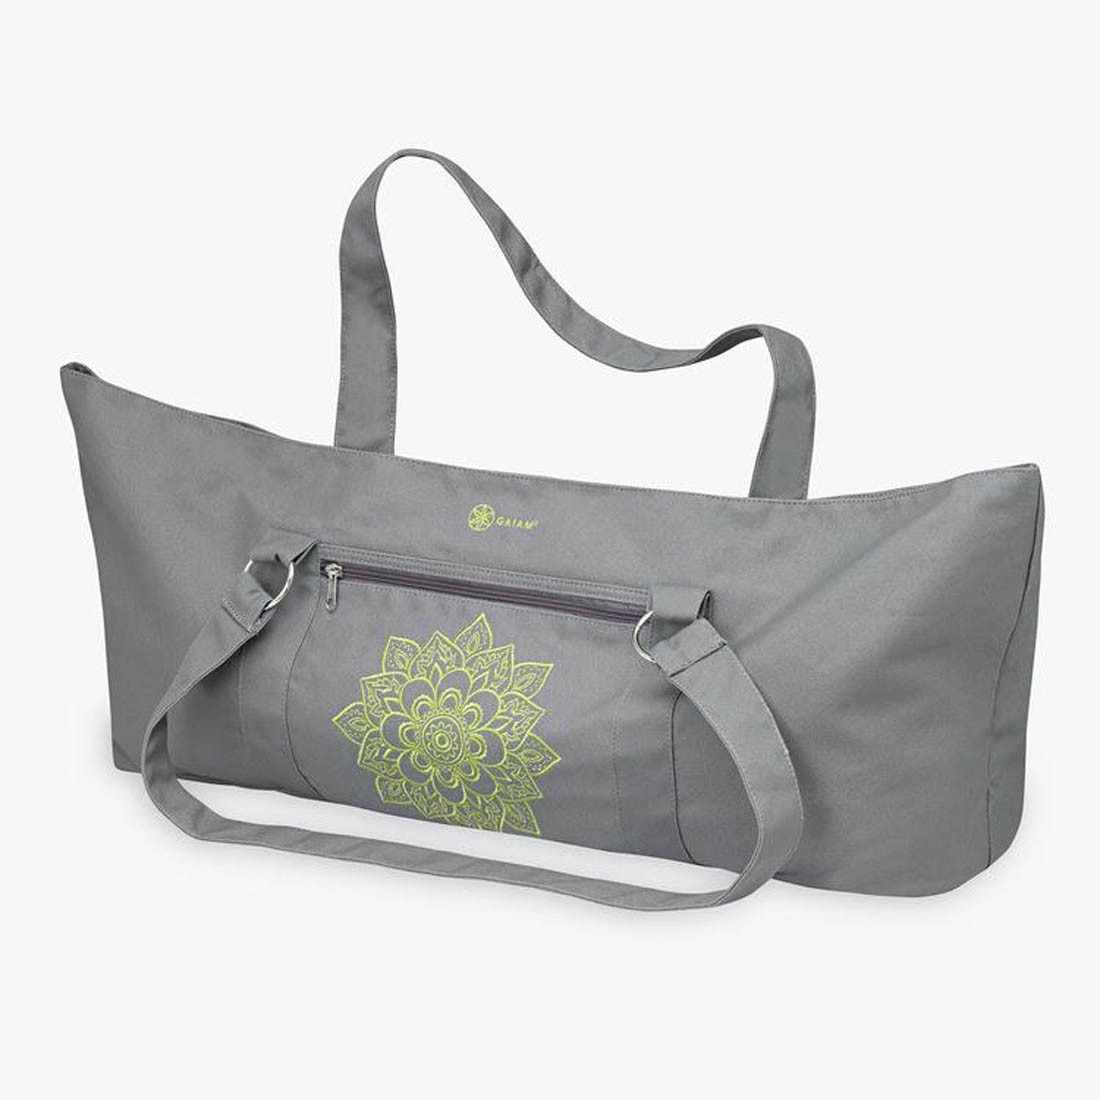 Buy GAIAM Citron Sundial Yoga Tote Bag - GAIAM, delivered to your